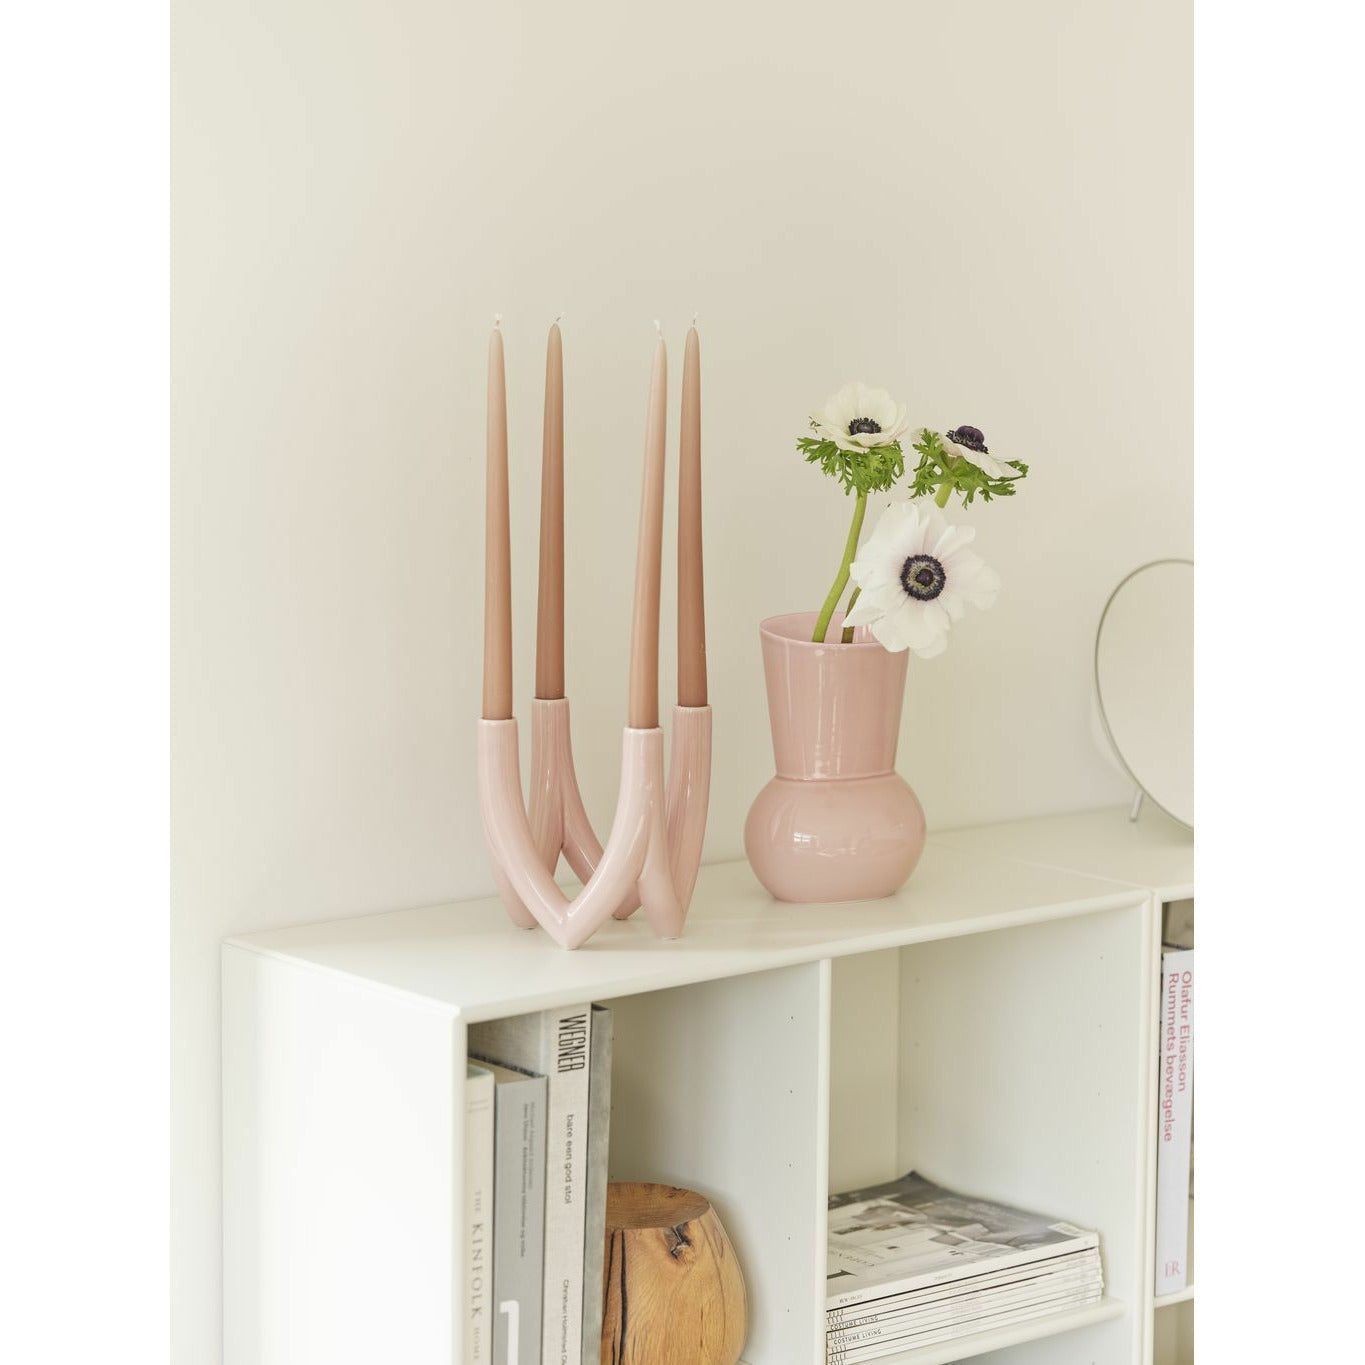 RO -Sammlung Nr. 66 Oval Vase, Pink